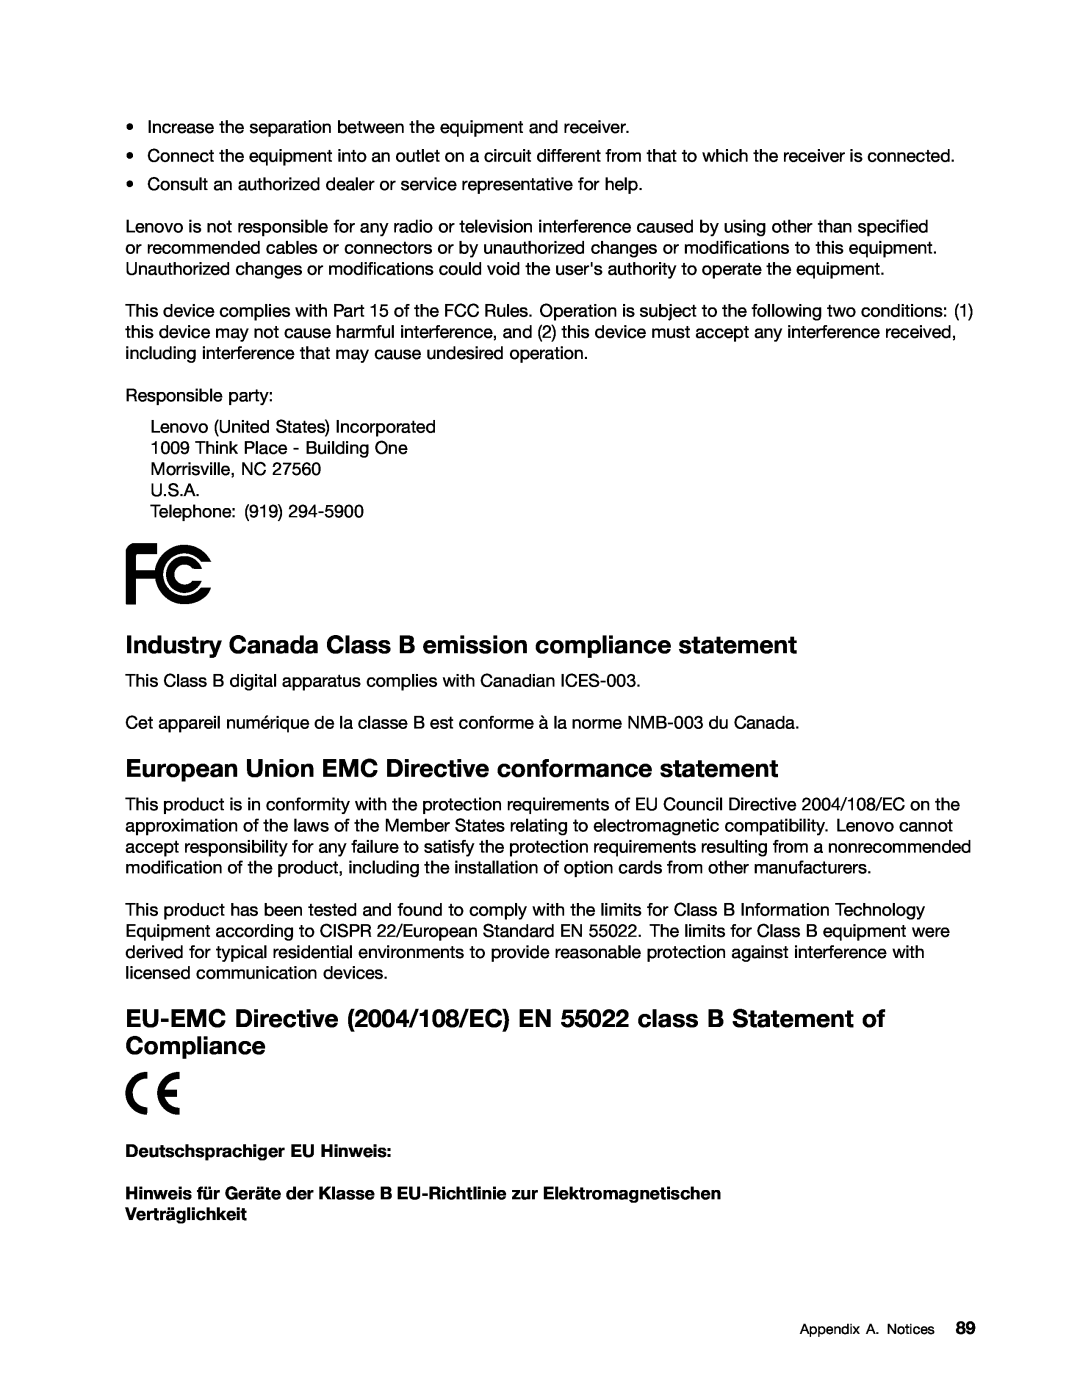 Lenovo 1010, 992 Industry Canada Class B emission compliance statement, European Union EMC Directive conformance statement 